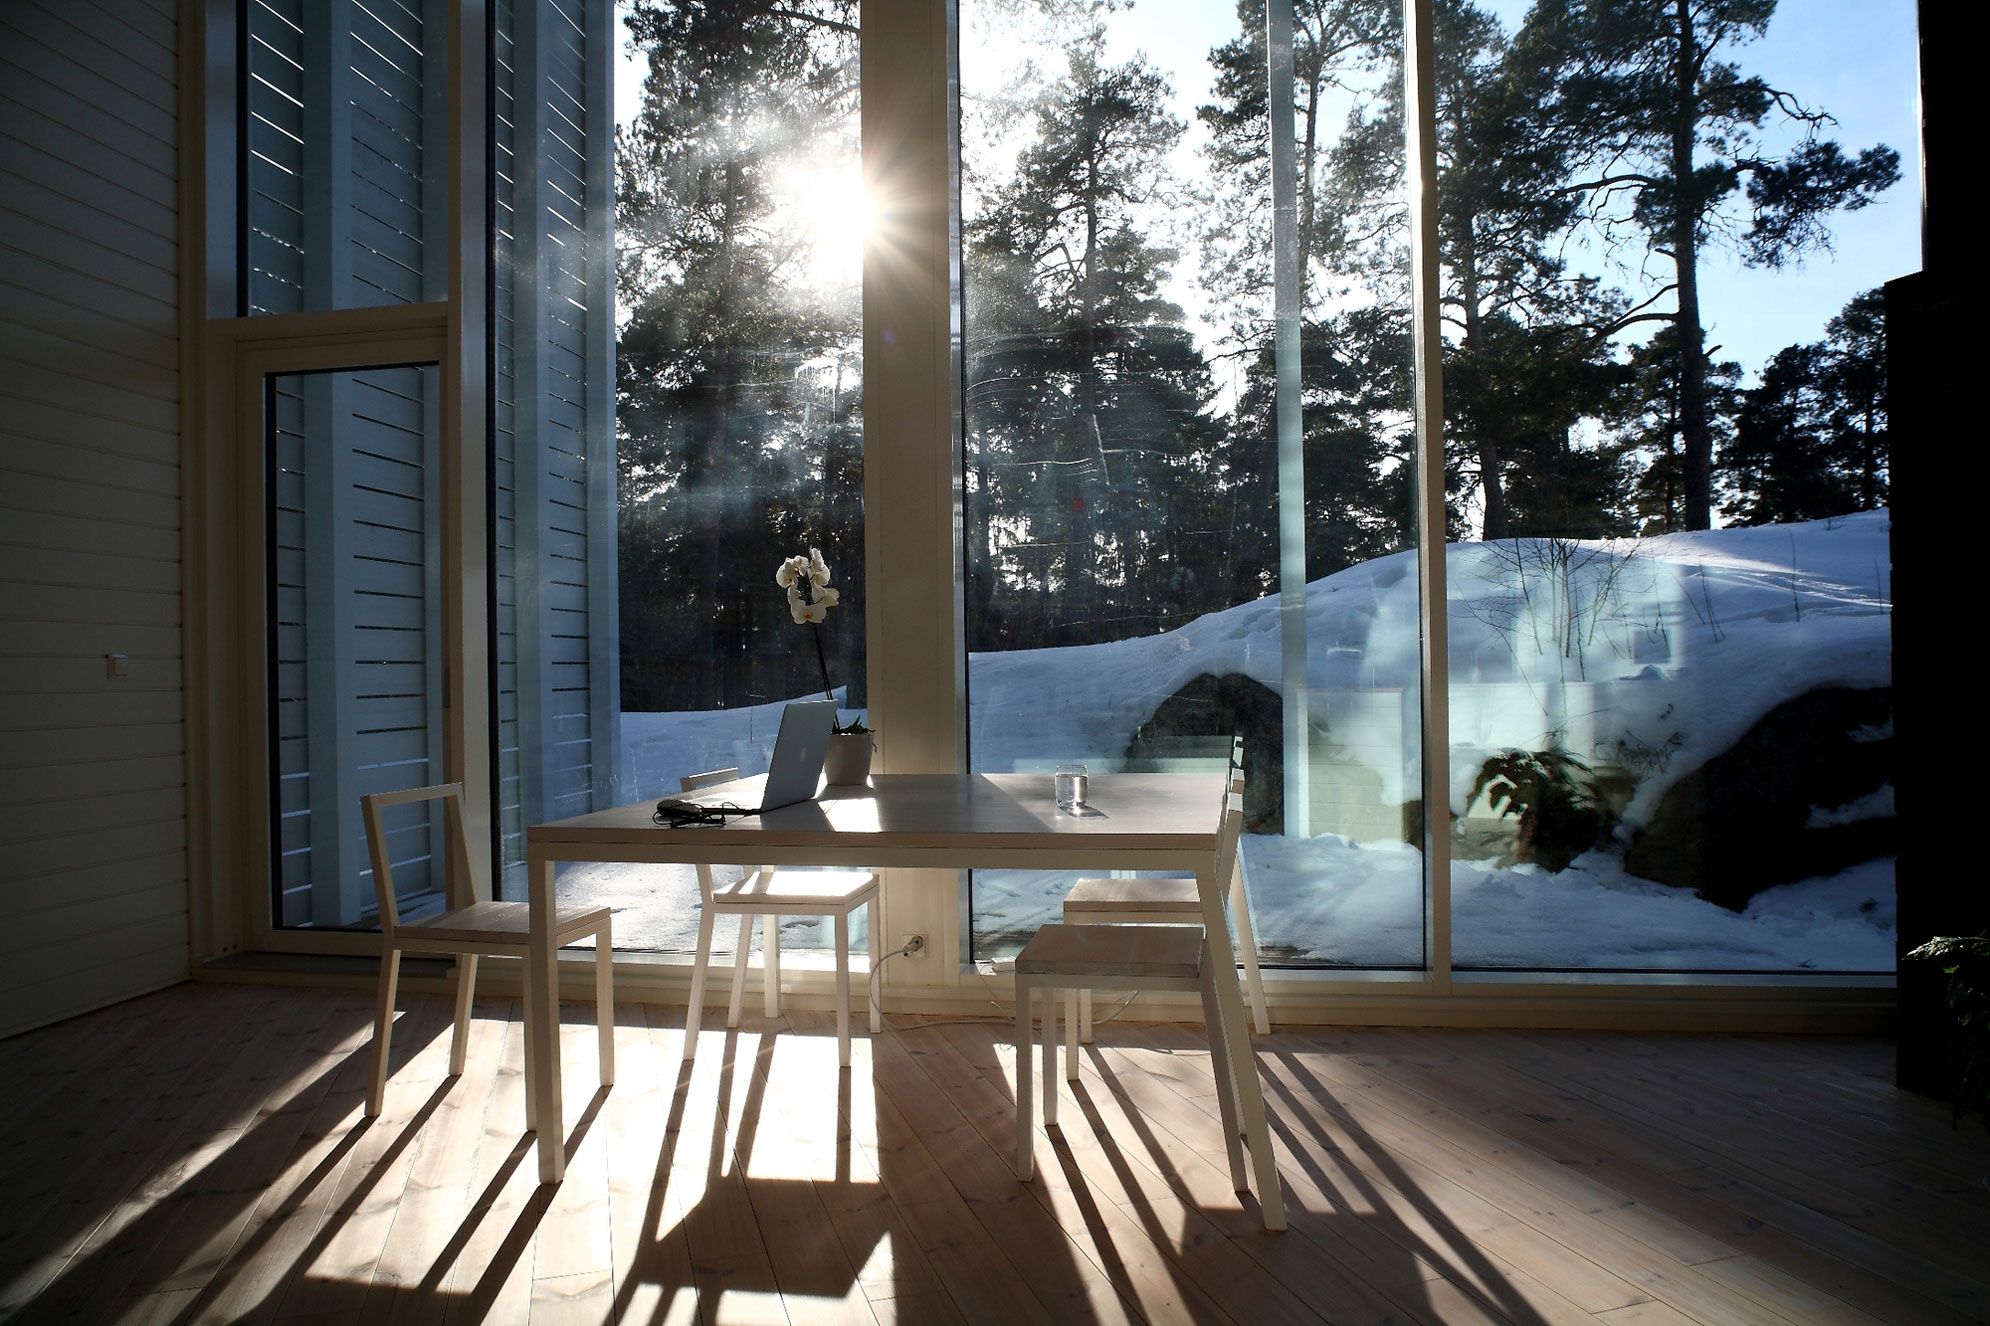 Wooden Family House in Finland | Homedezen